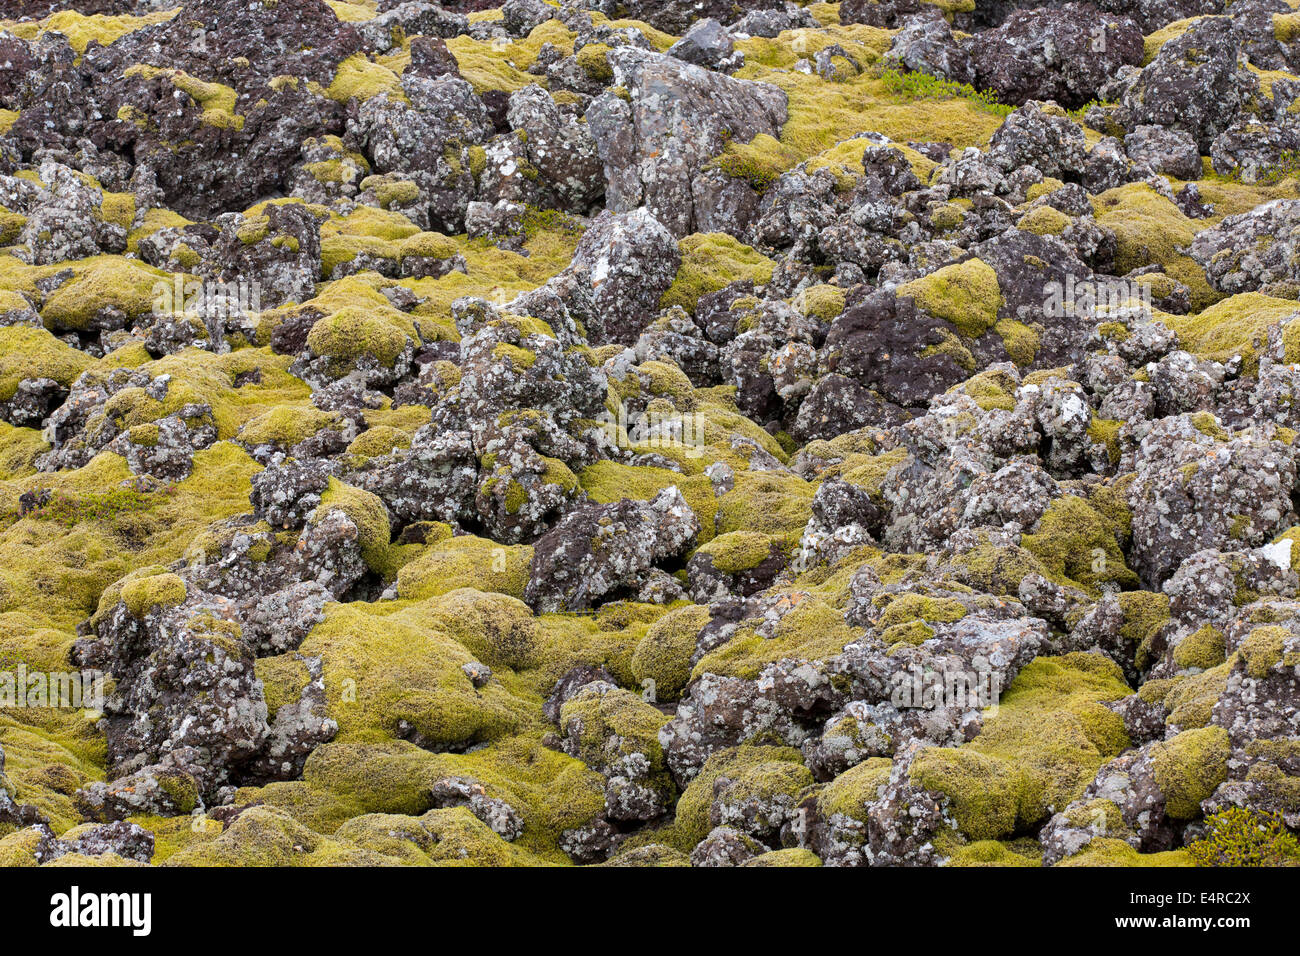 Iceland, scenic, Landschaft in Island Stock Photo